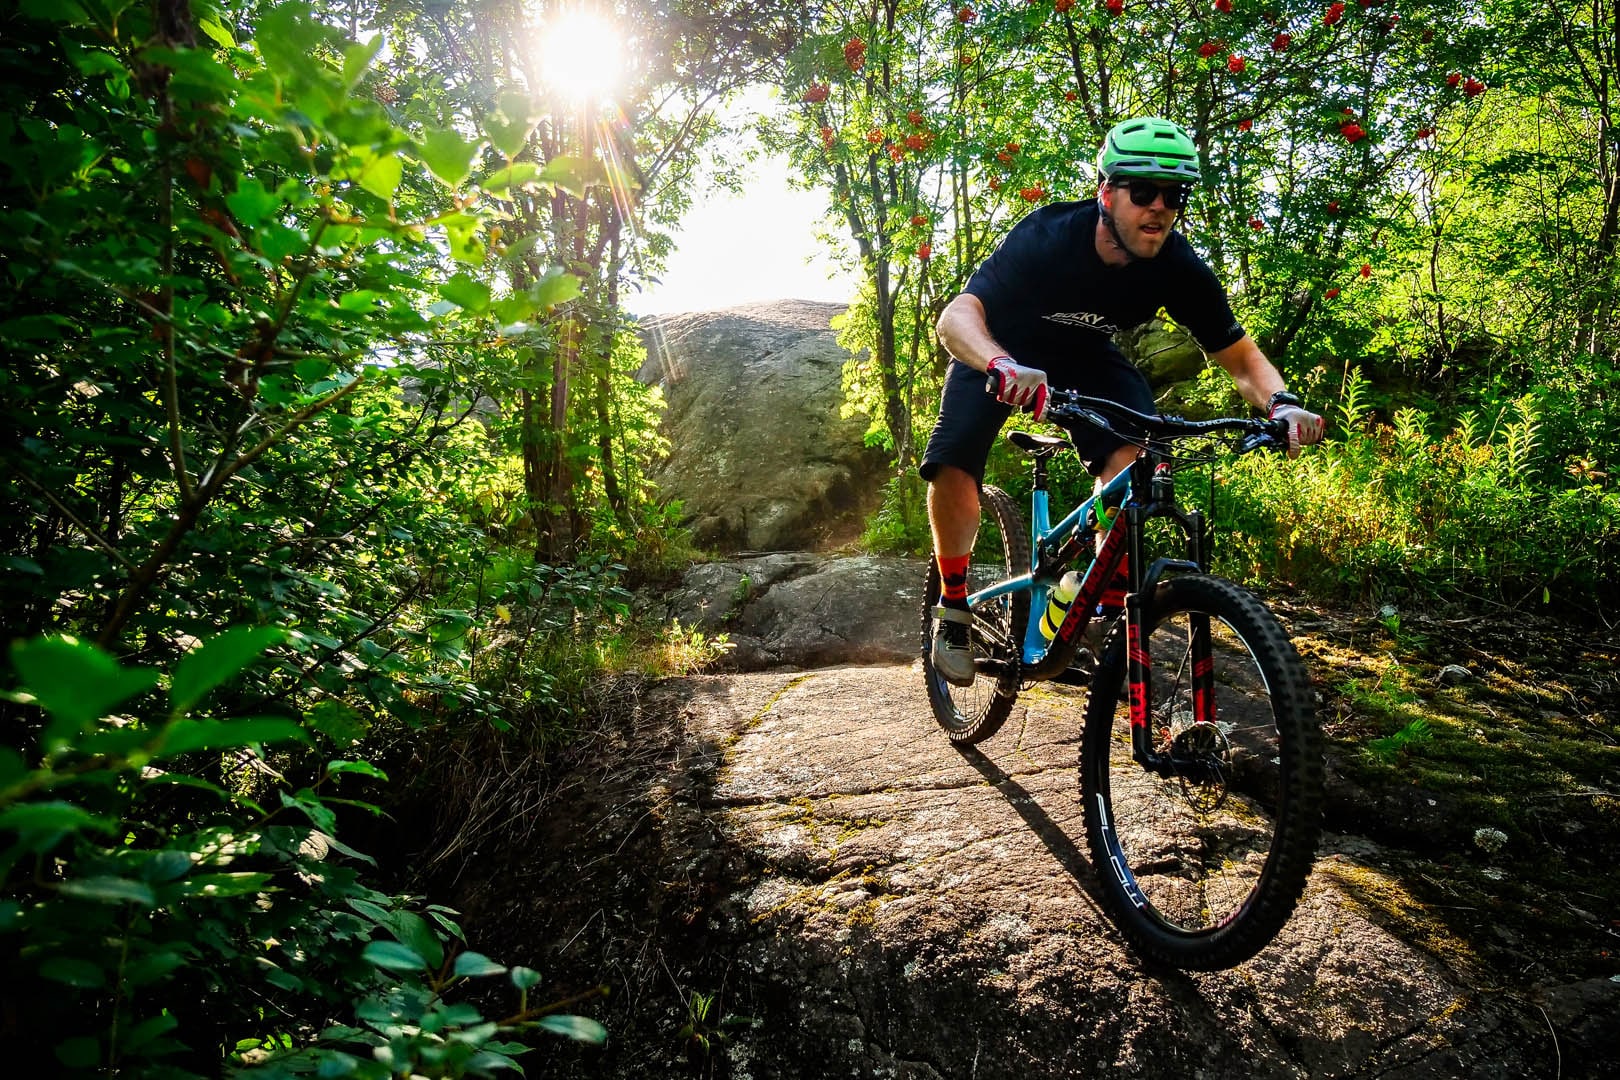 Mountain biker going across volcanic rock. A bright sun shines through the green trees.